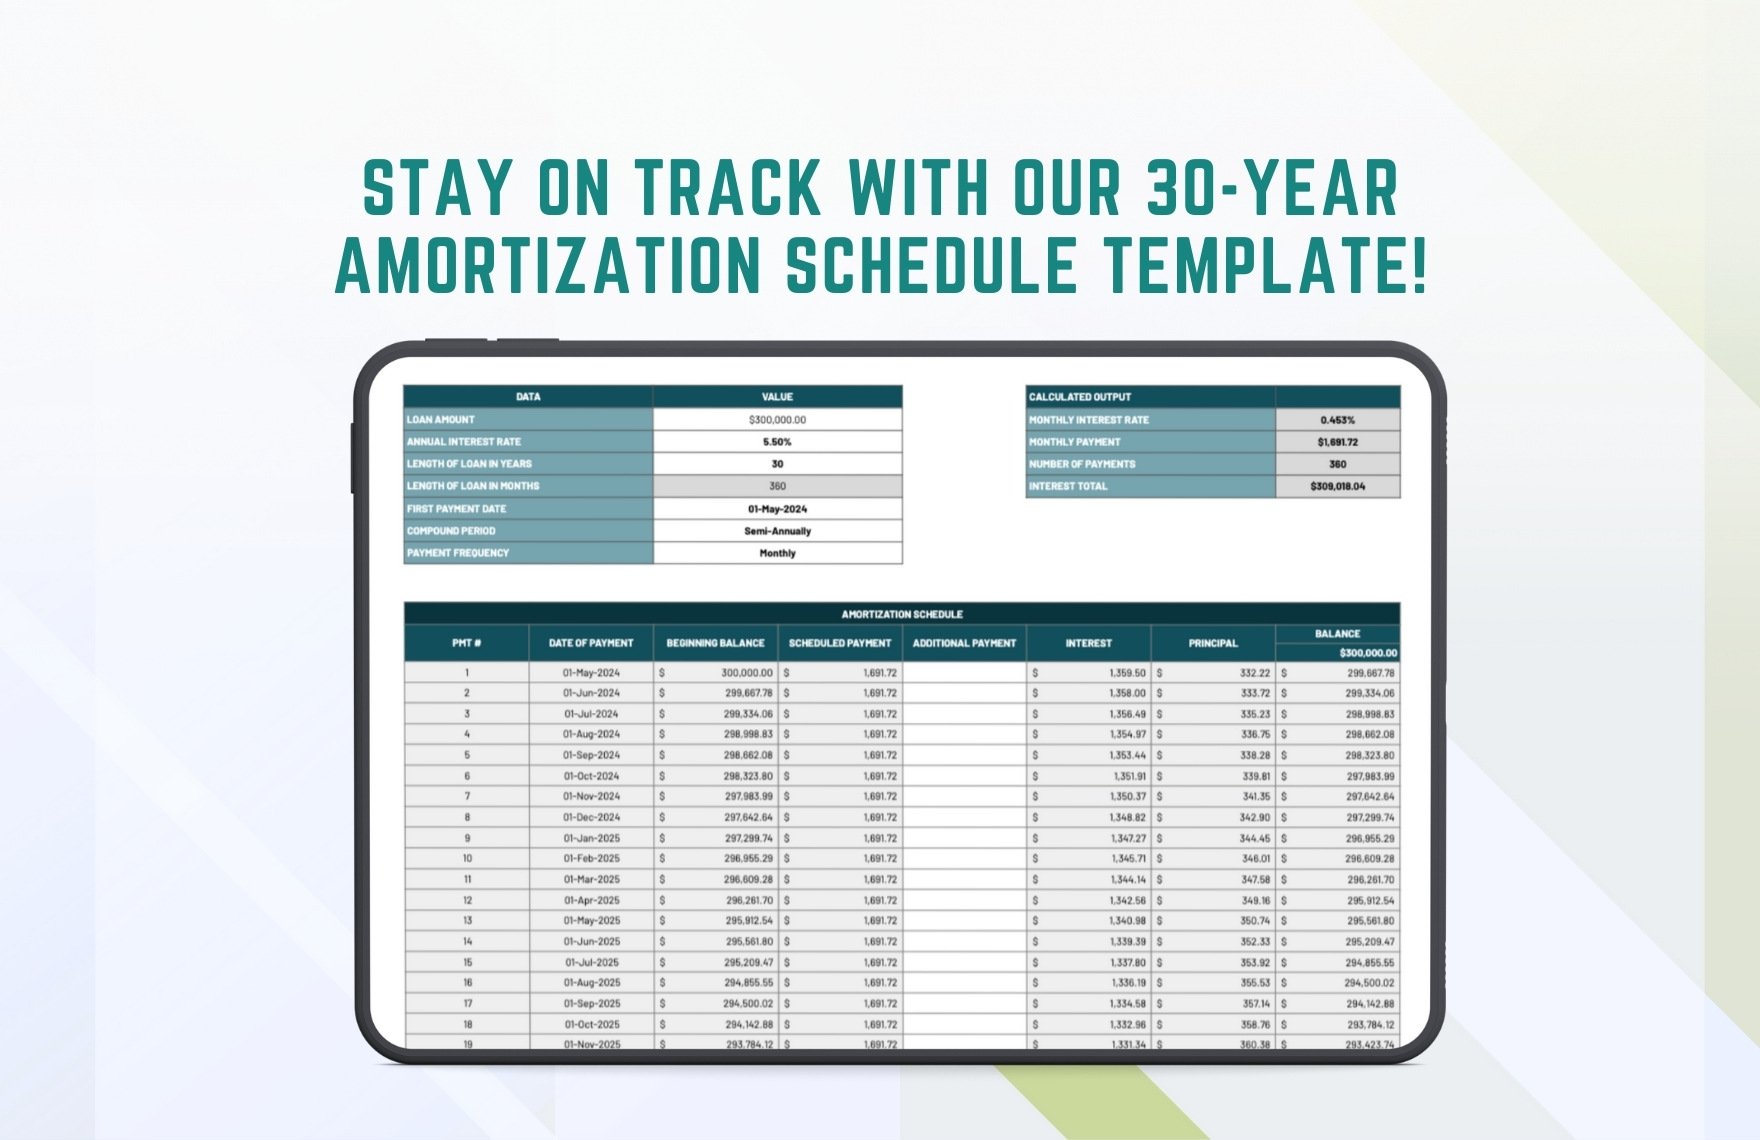 30-Year Amortization Schedule Template